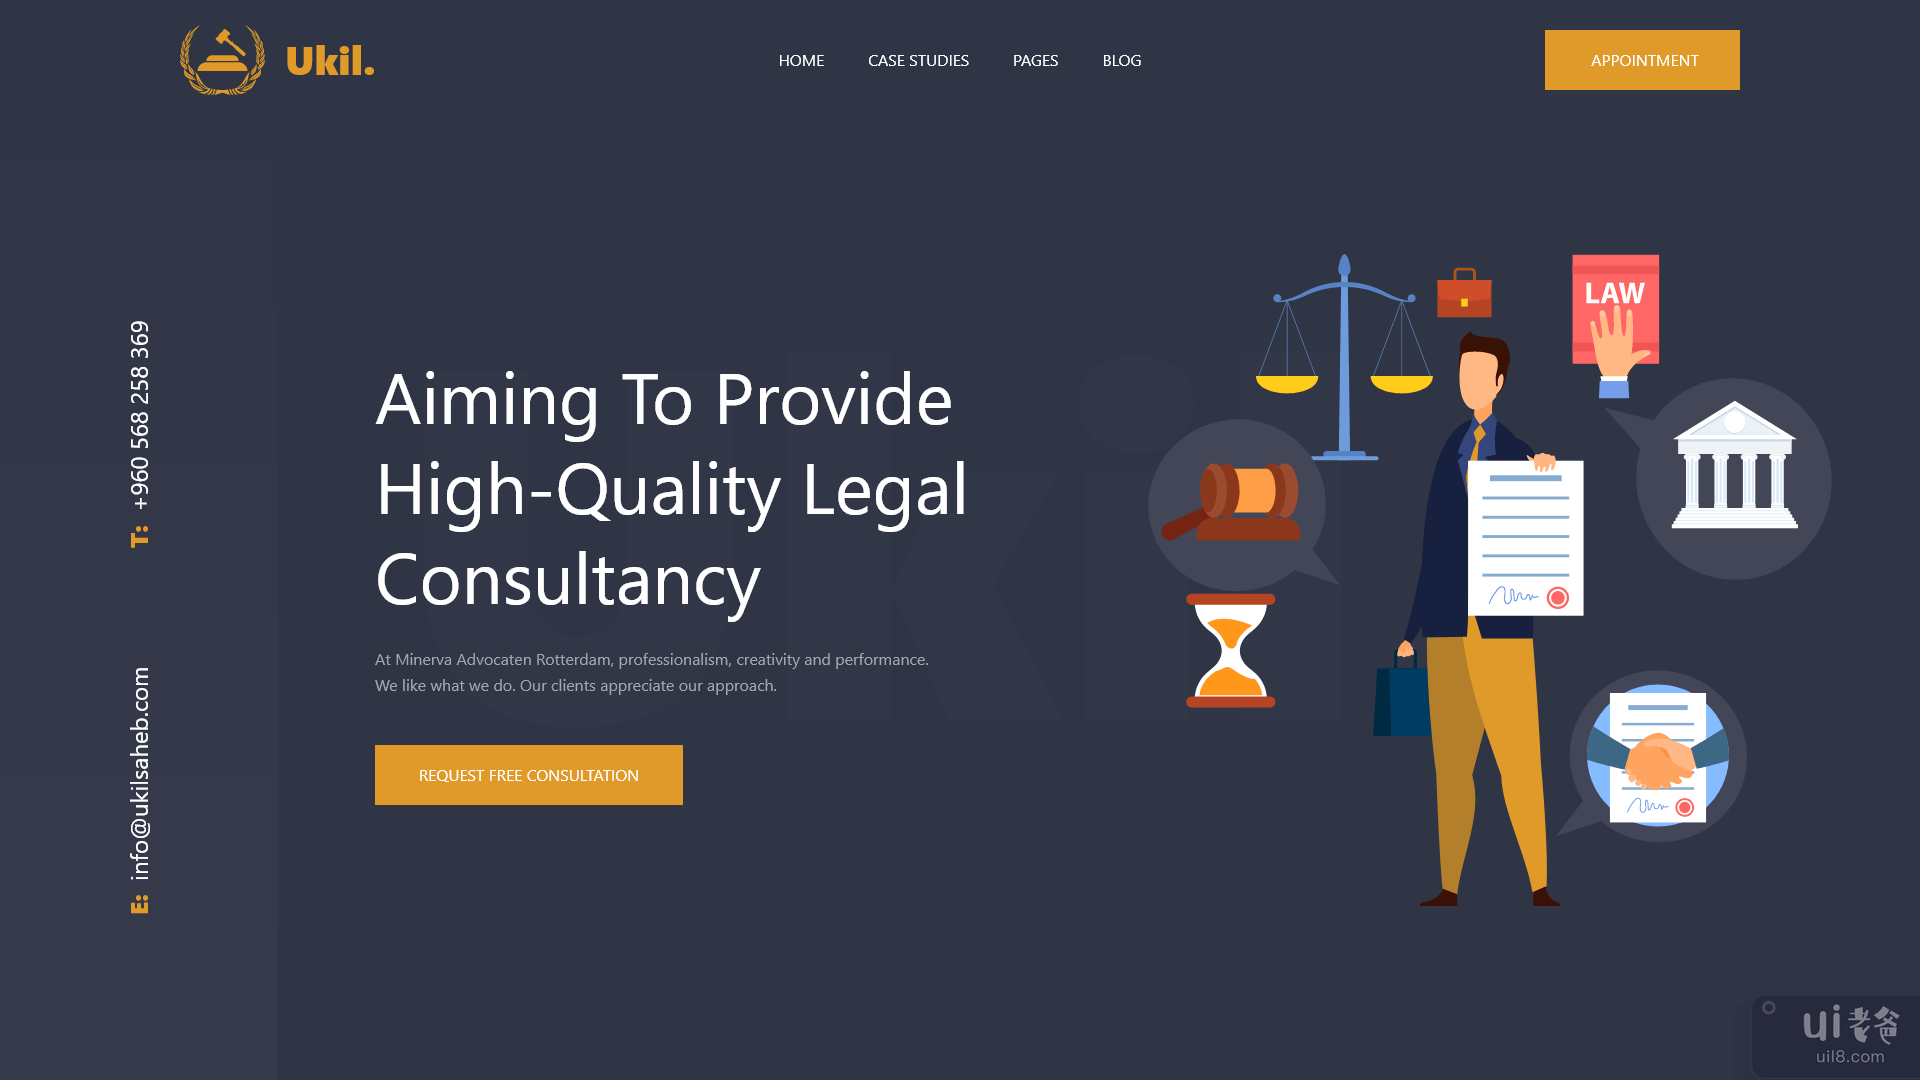 数字律师网站横幅(Digital Lawyer Website Banner)插图1